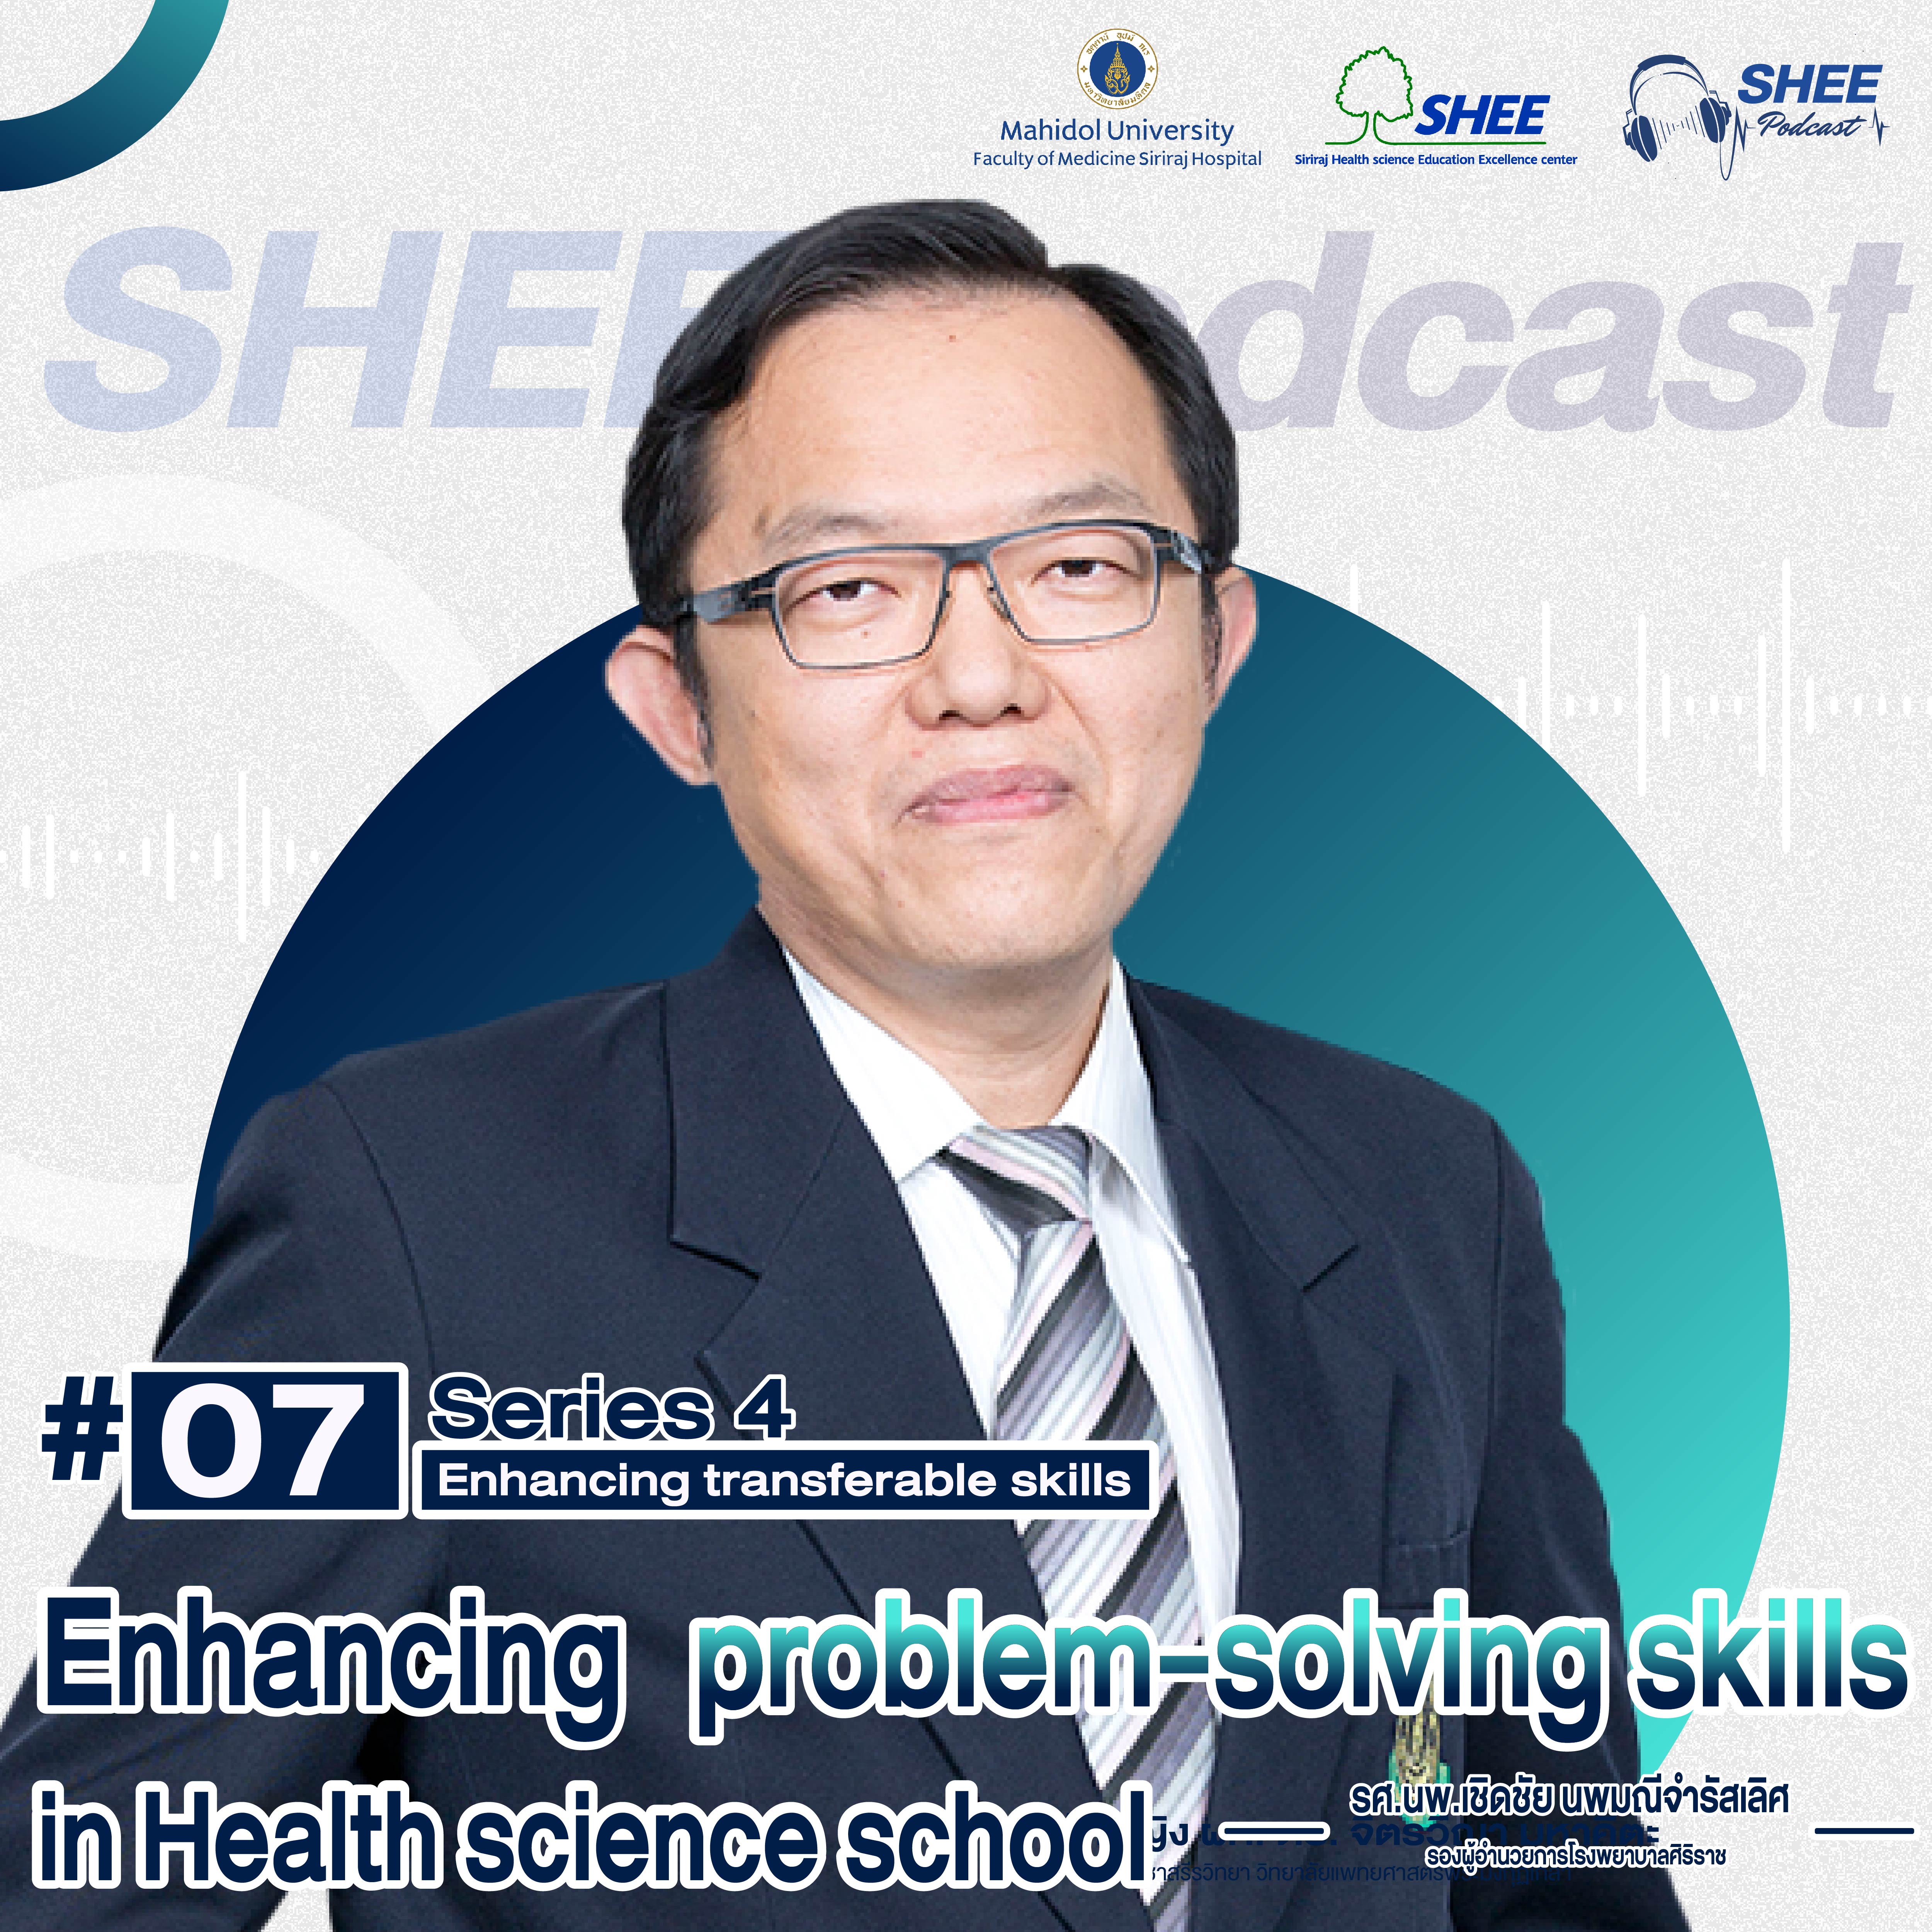 Episode 7 : Enhancing problem-solving skills in Health science school